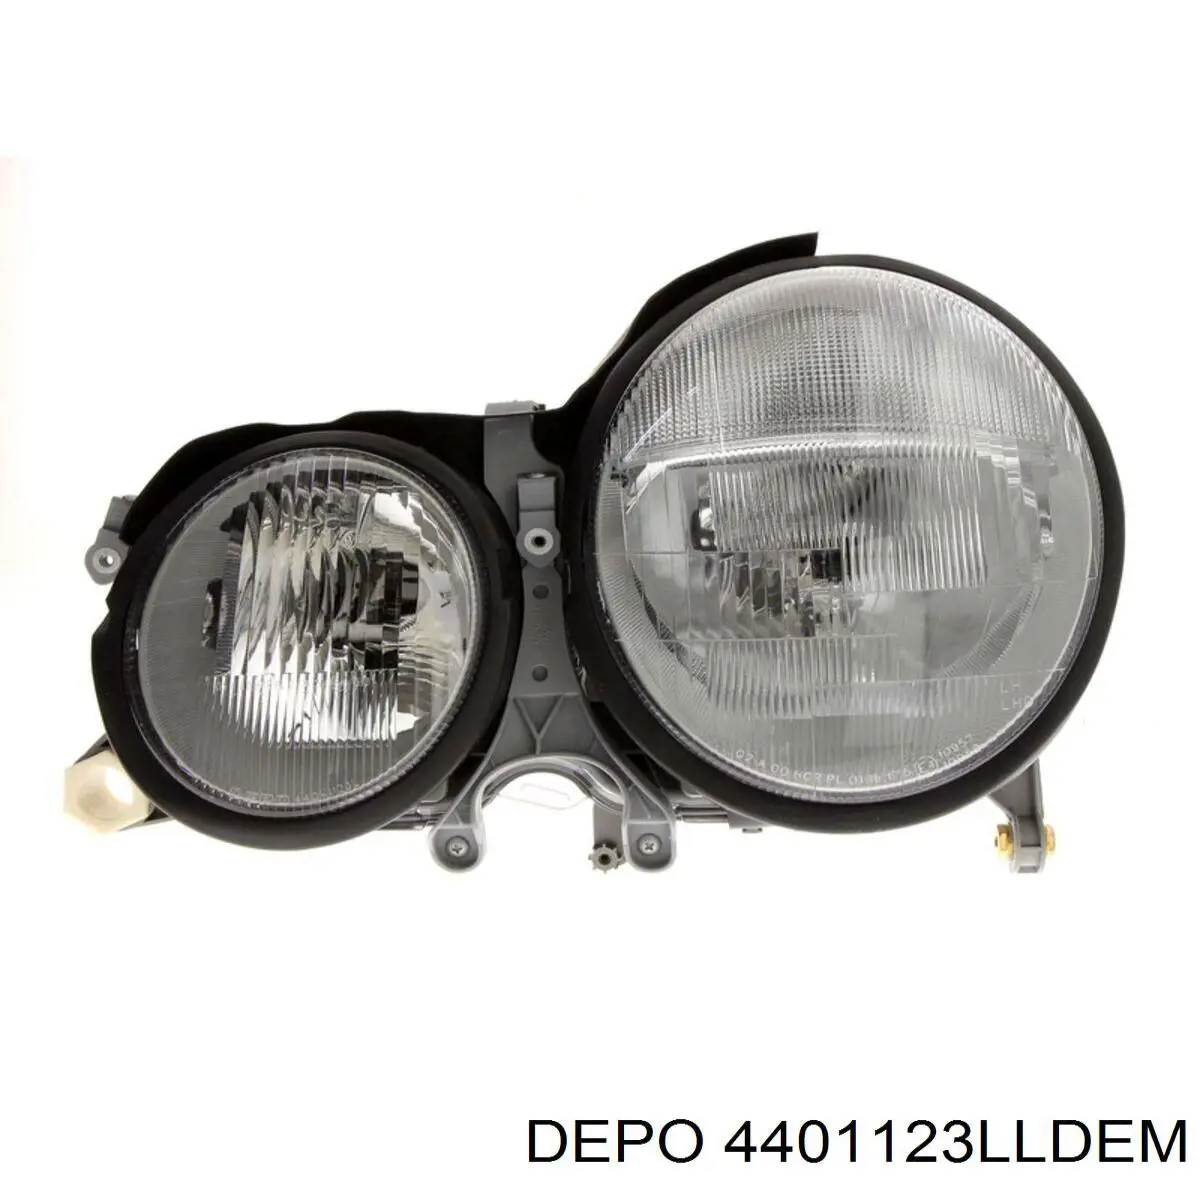 440-1123L-LD-EM Depo/Loro фара левая